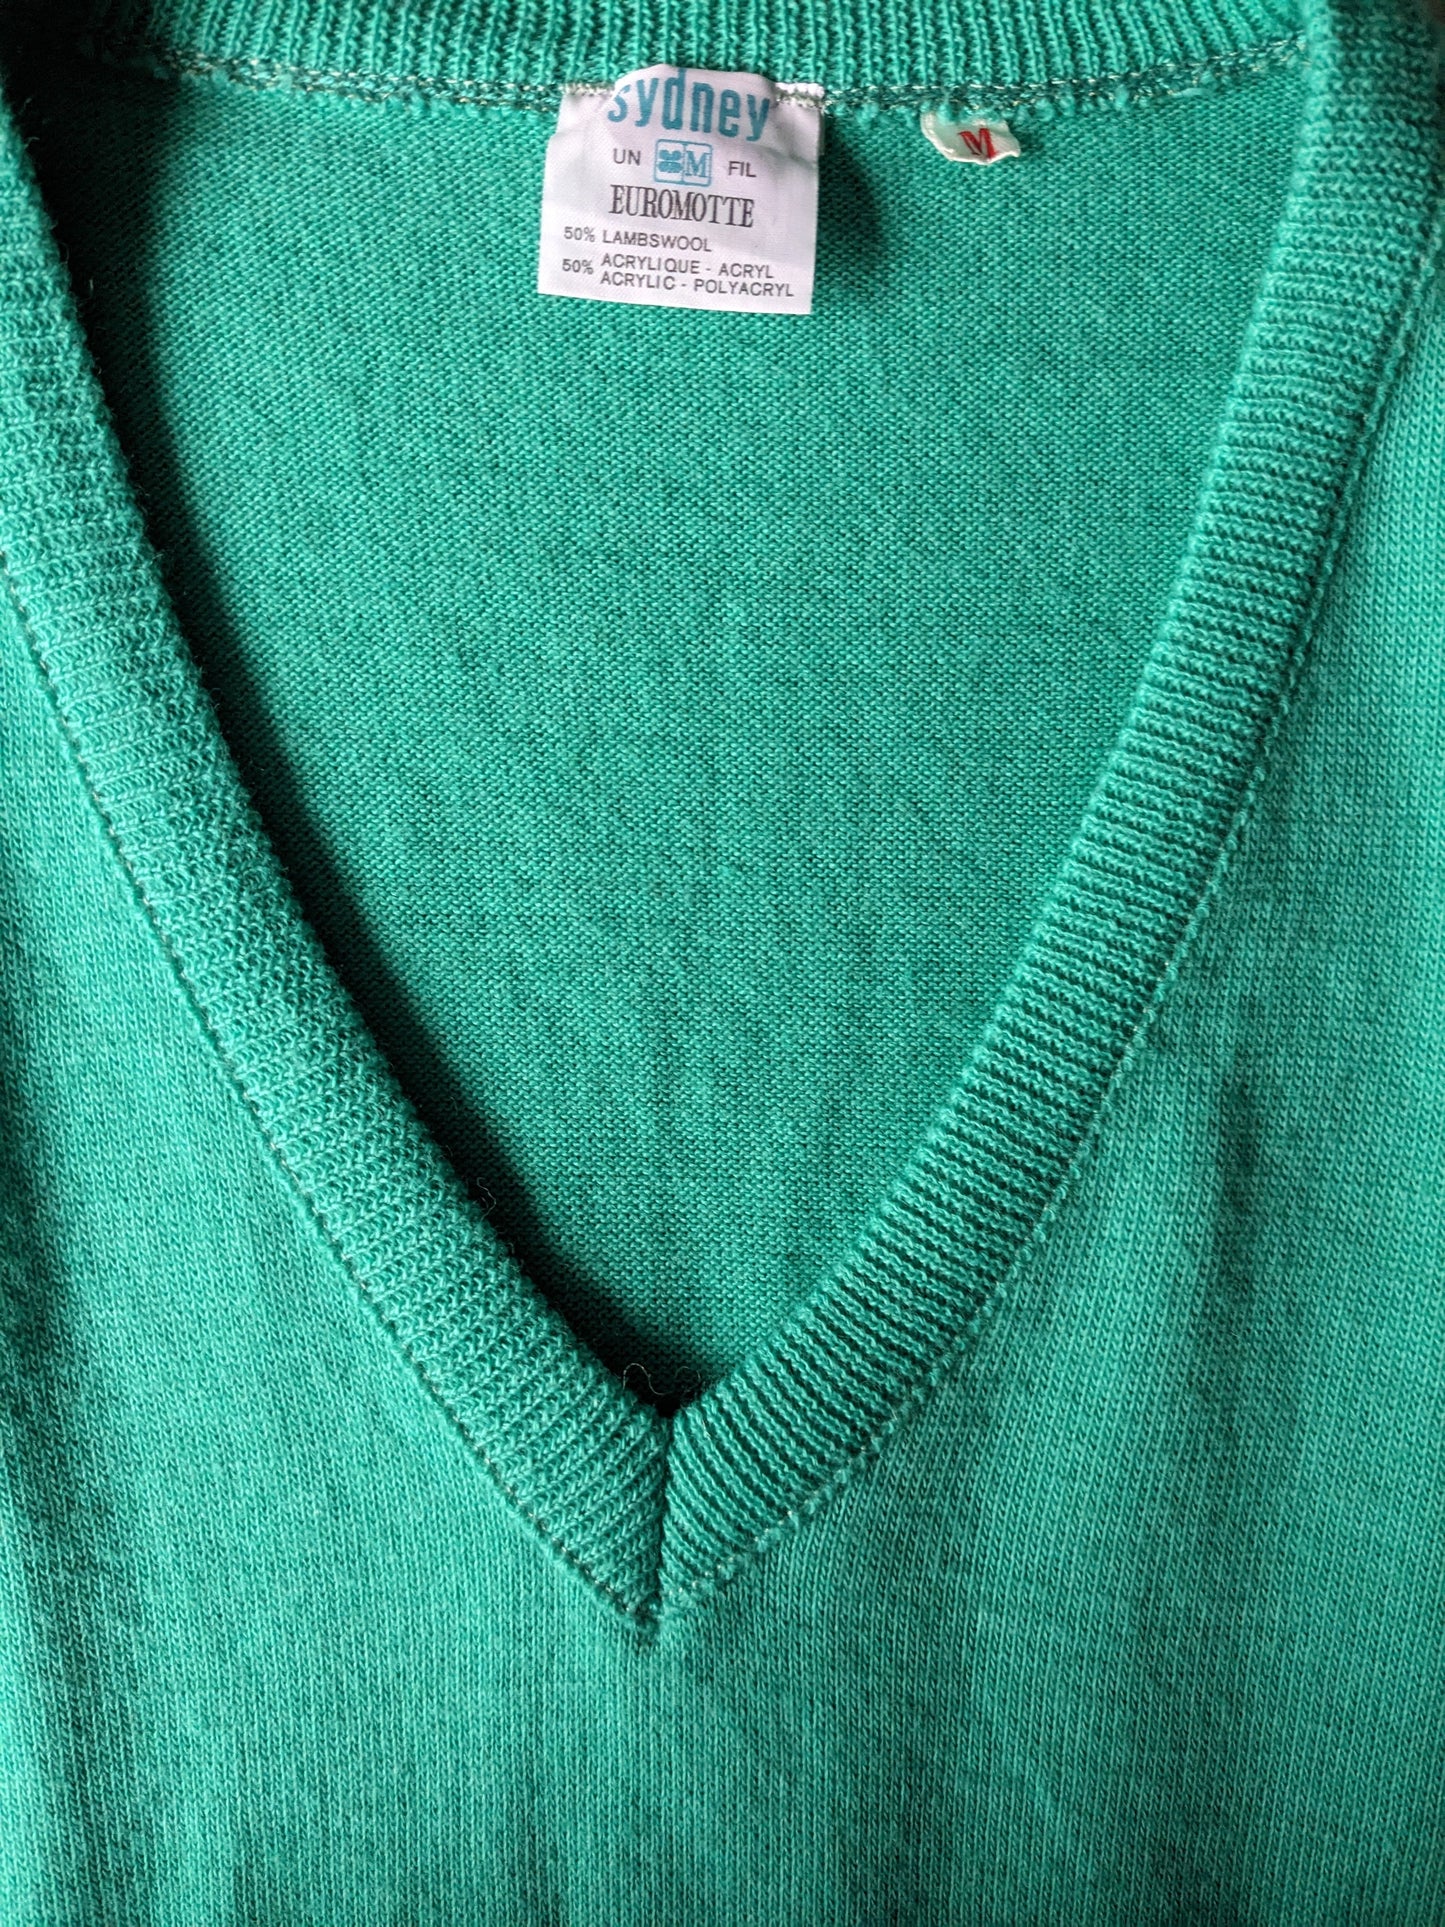 Vintage Sydney Lambwool Spencer. Verde colorato. Taglia M. 50% lana.